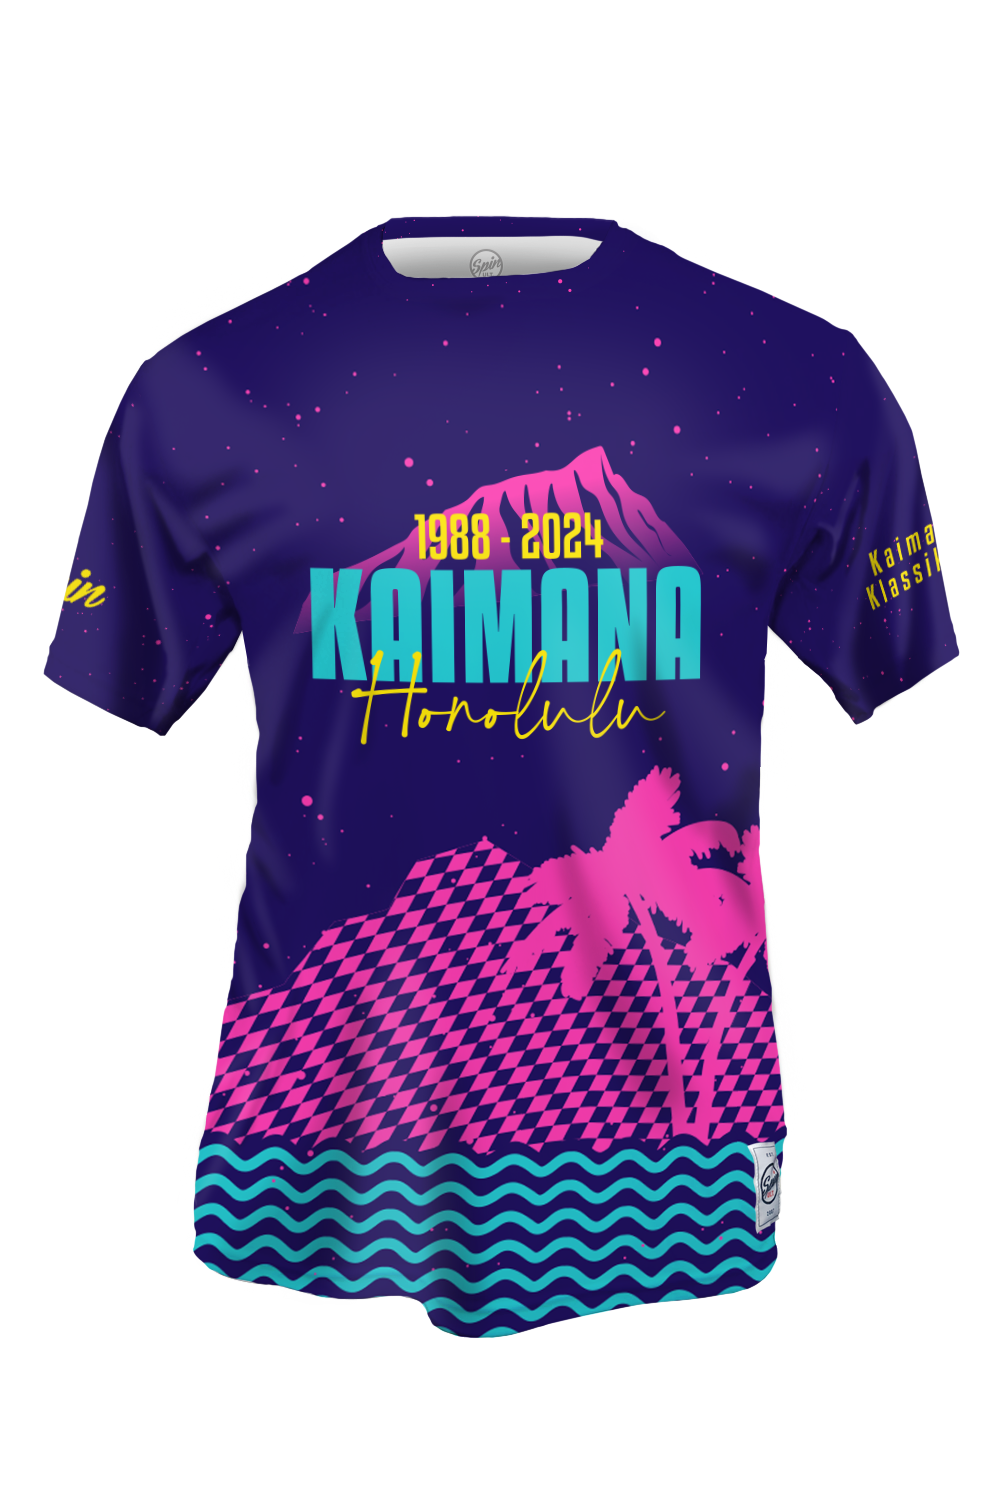 Kaimana Klassik Short Sleeve Jersey (Purple)